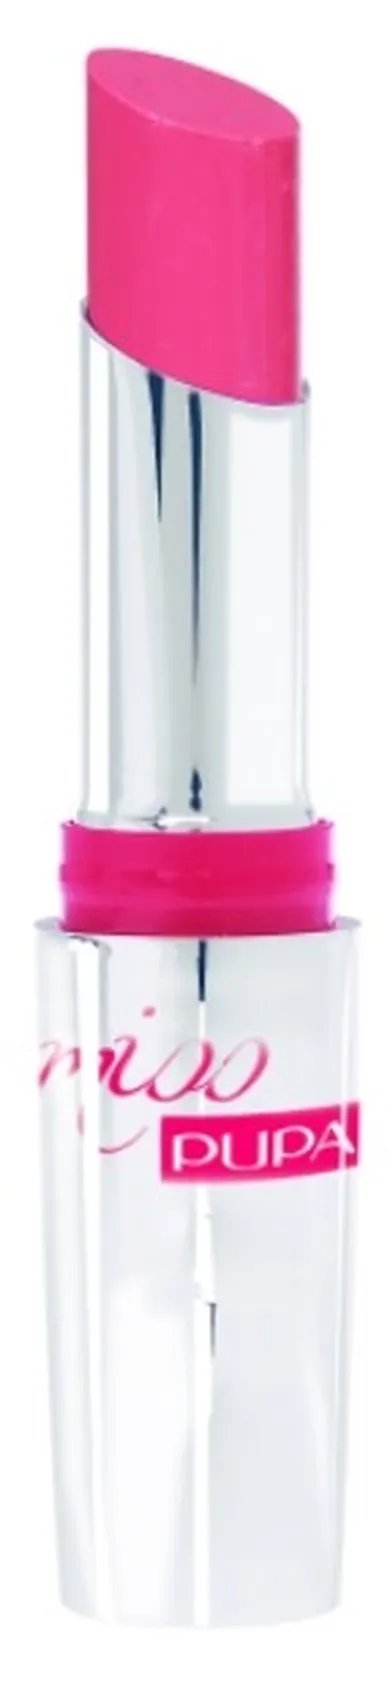 Pupa, Miss Pupa Ultra Brilliant Lipstick, pomadka do ust 101, 2,4 ml